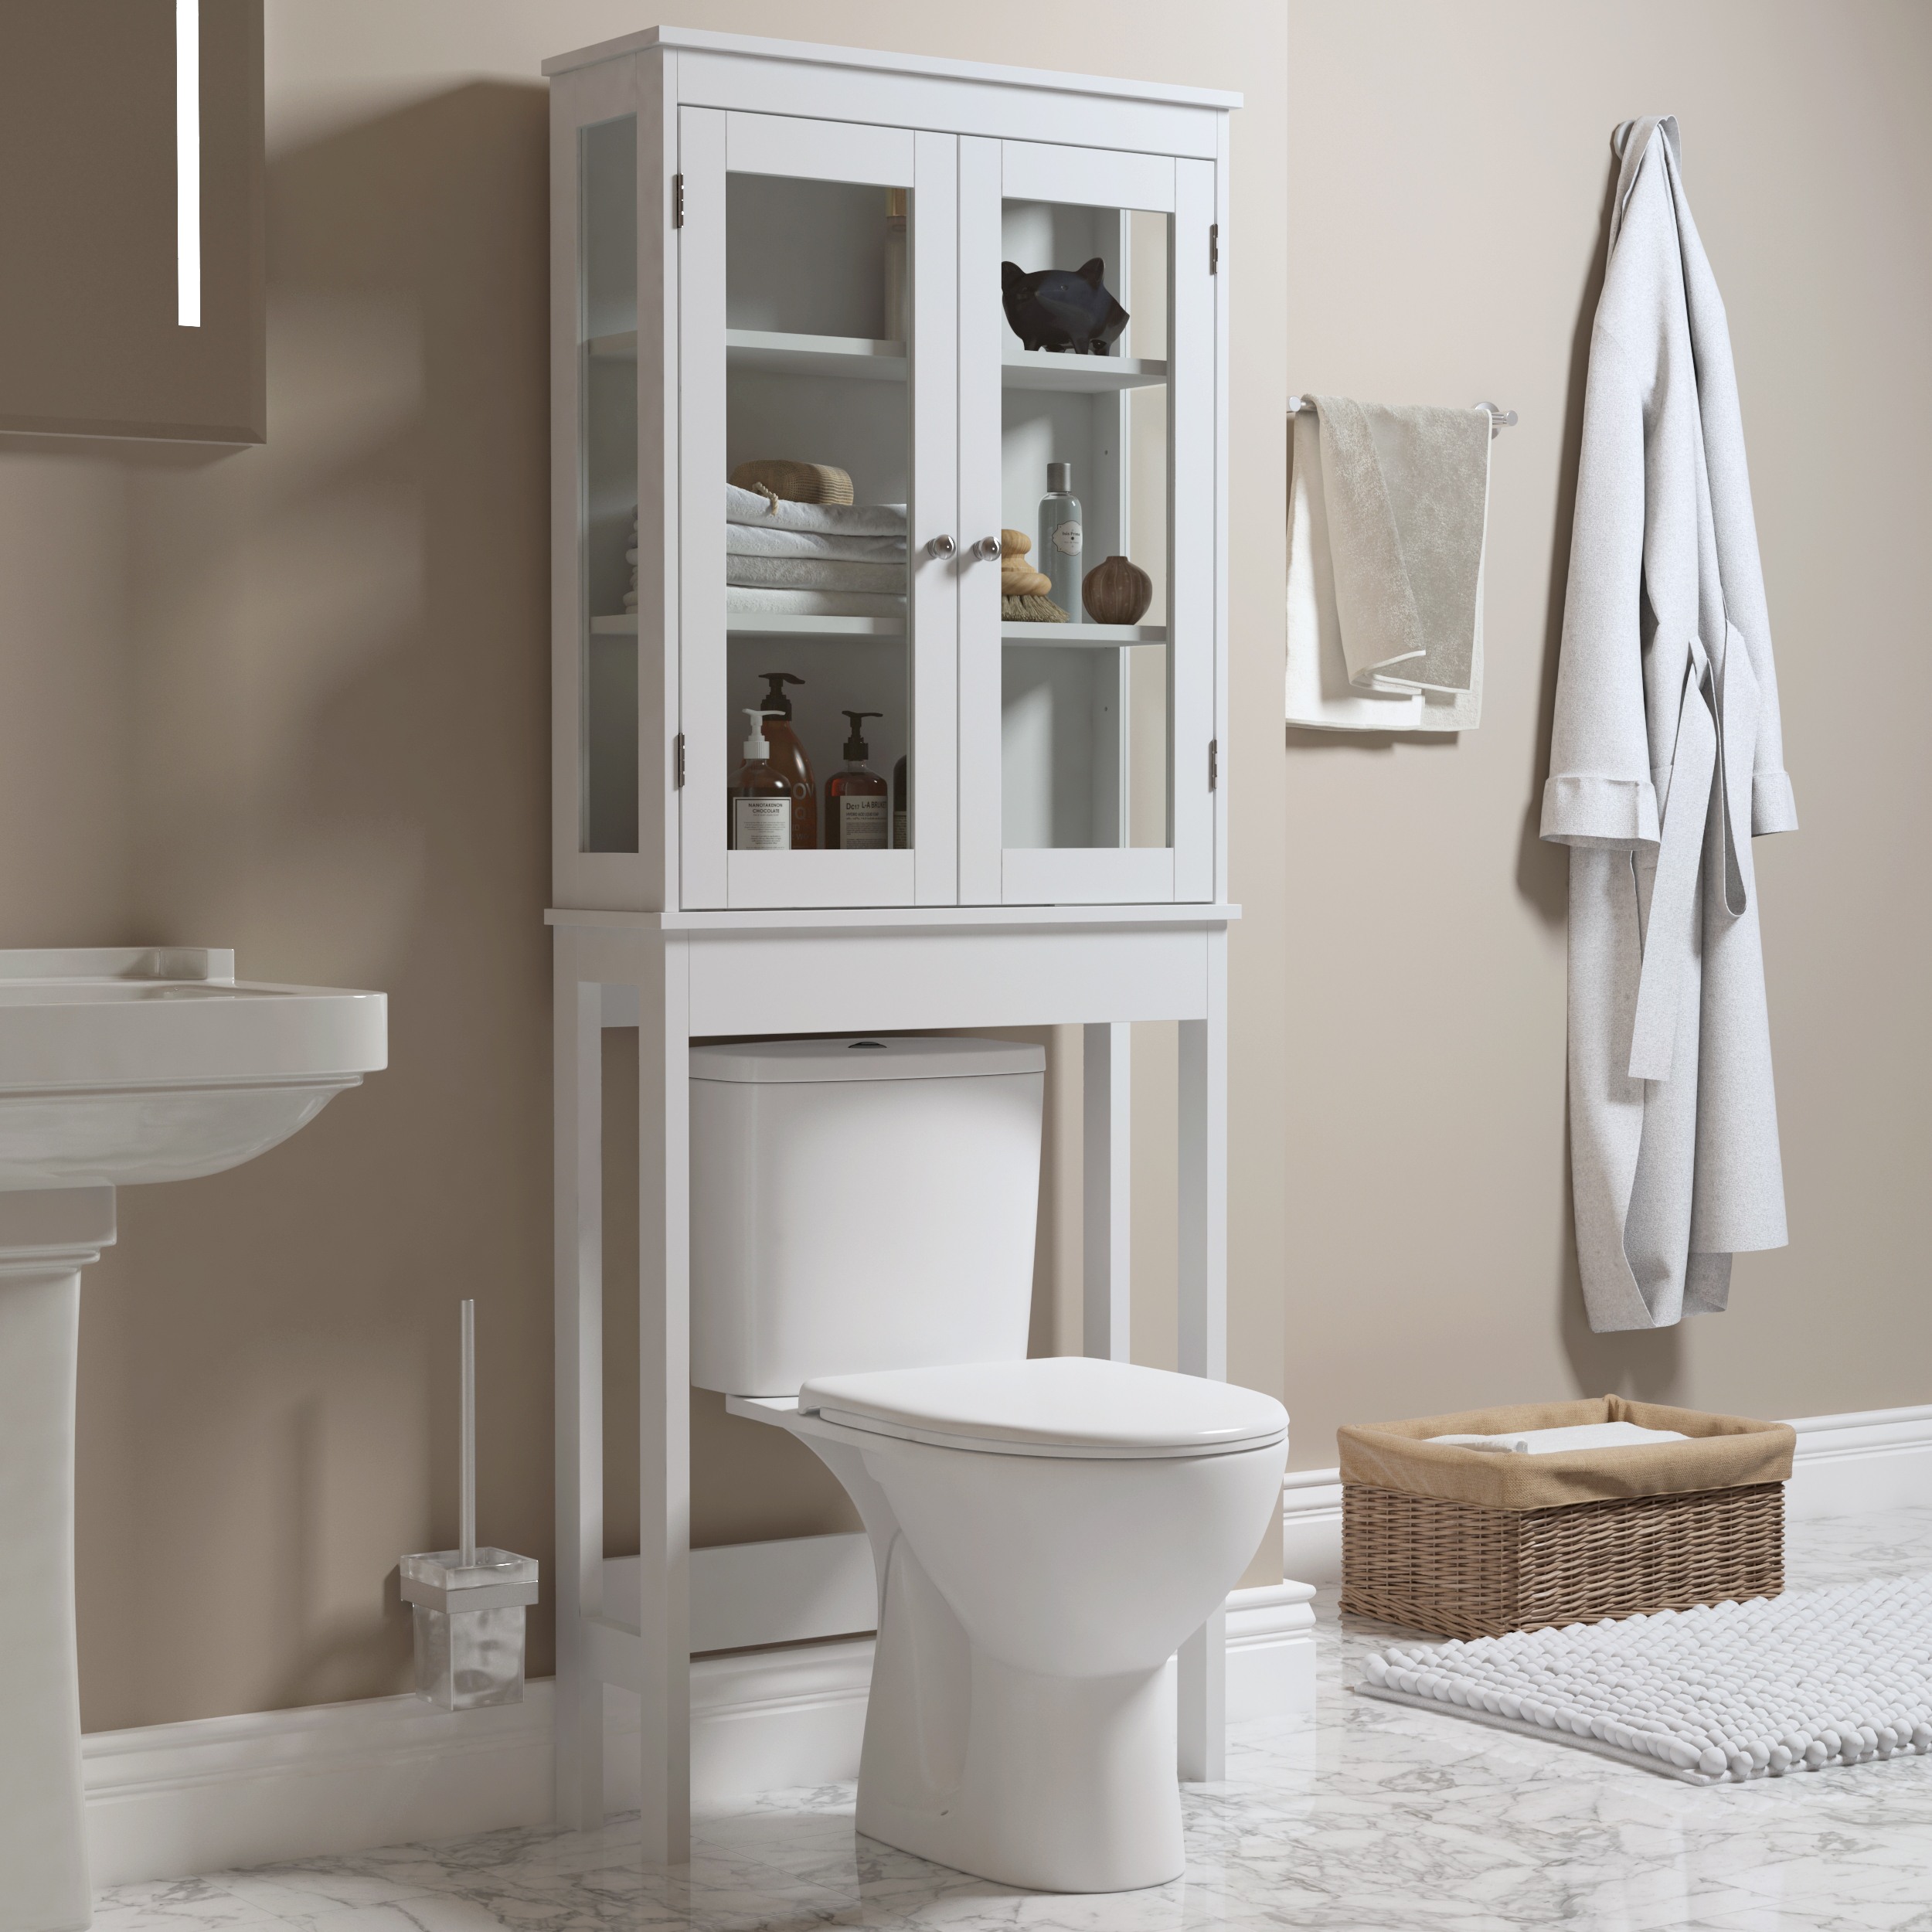 6622165cm-Over-the-Toilet-Storage-Cabinet-Bathroom-Shelves-Organizer-Space-Saver-Bath-Rack-1614005-7